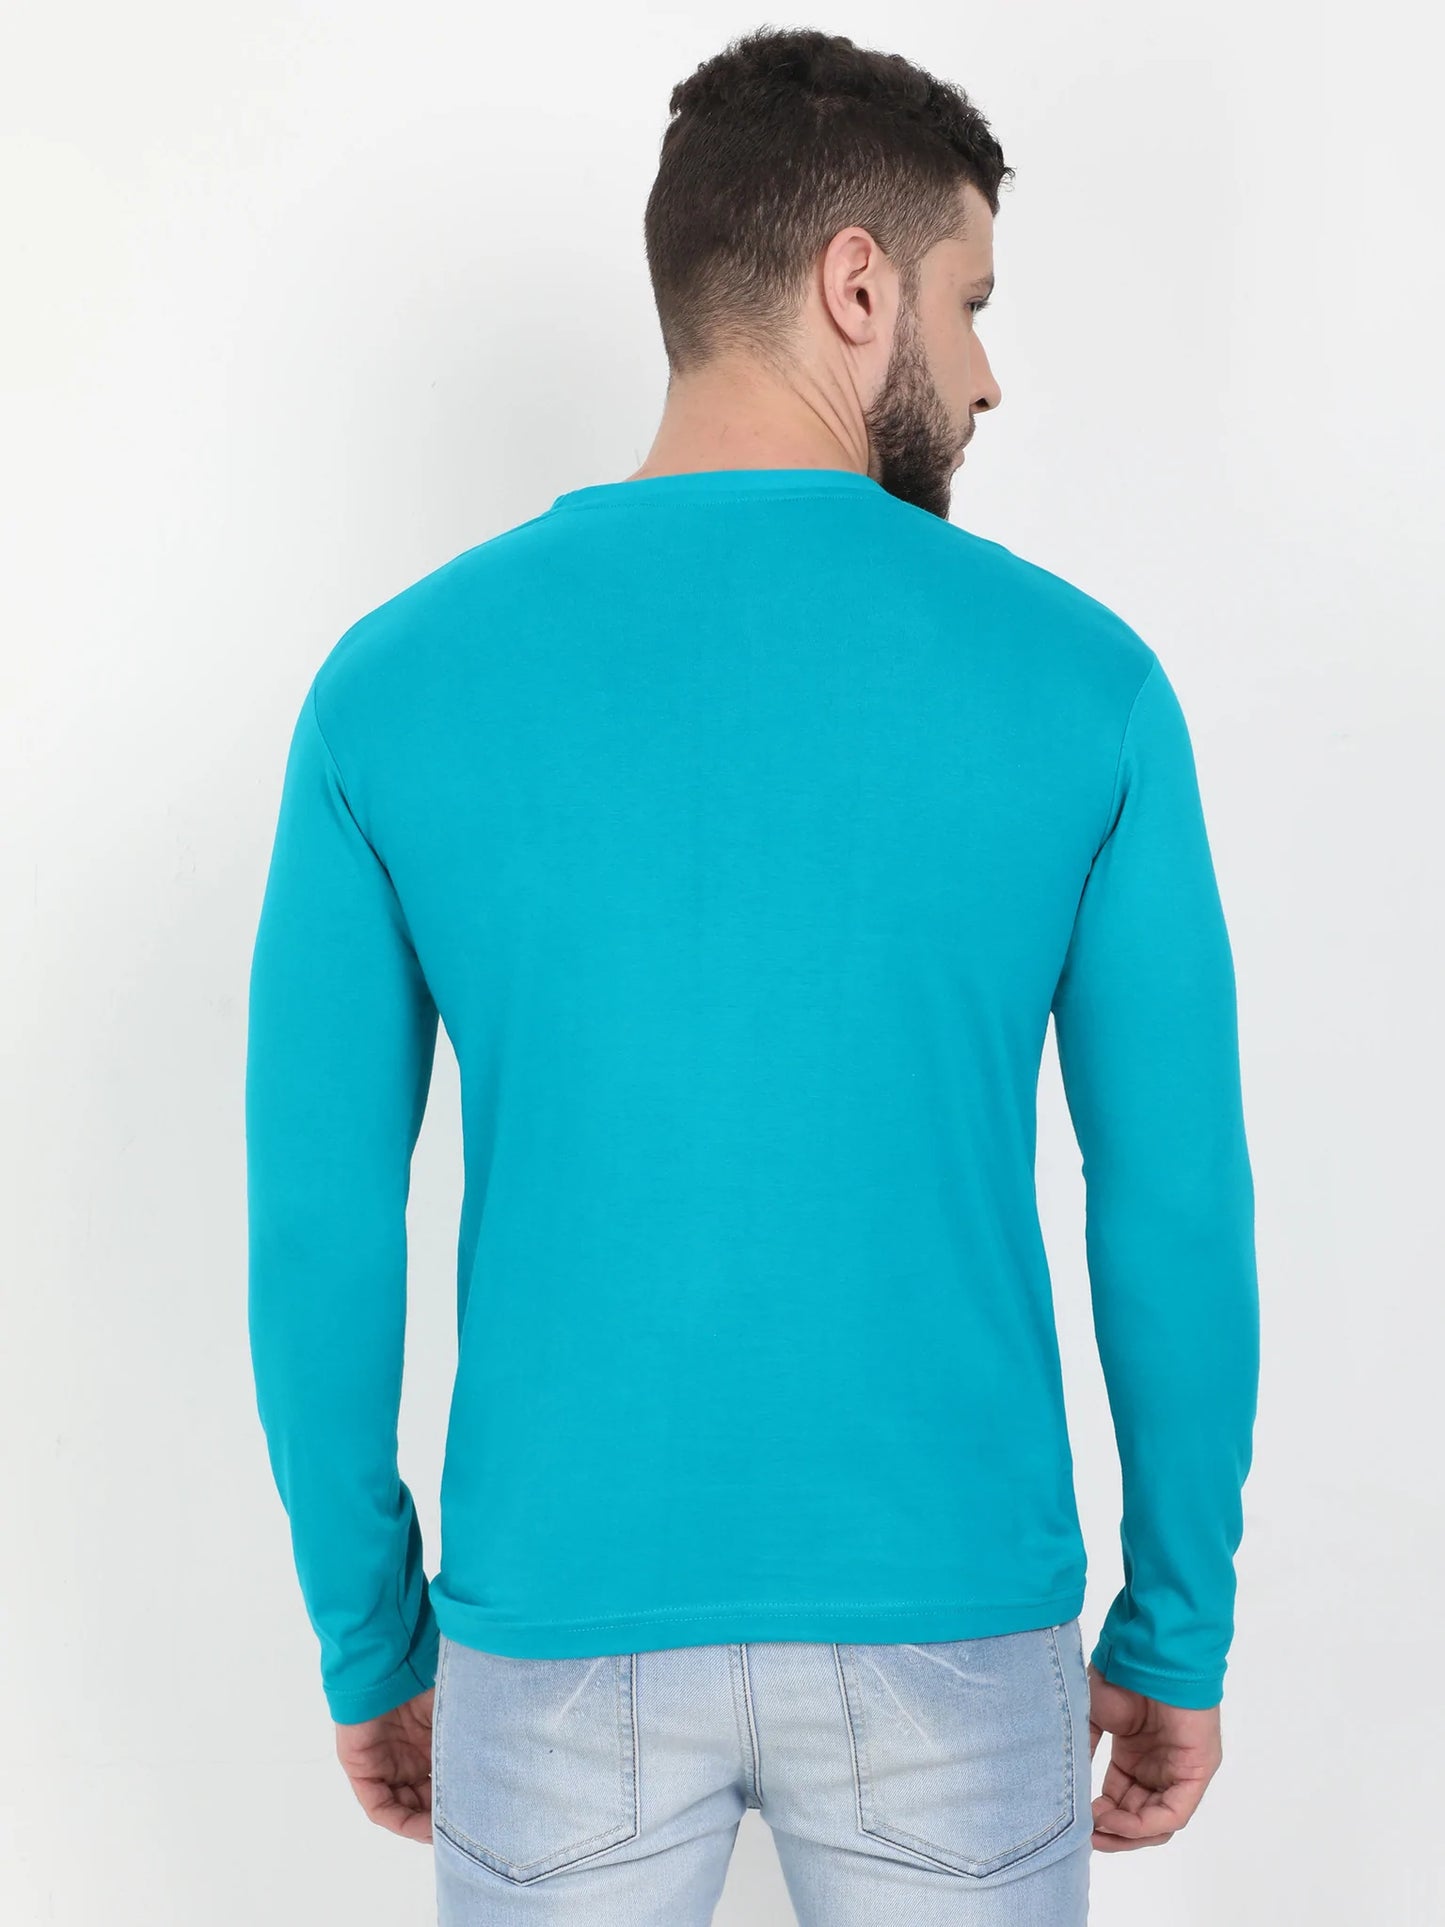 Men's Cotton Plain Round Neck Full Sleeve Reliance Green Color T-Shirt